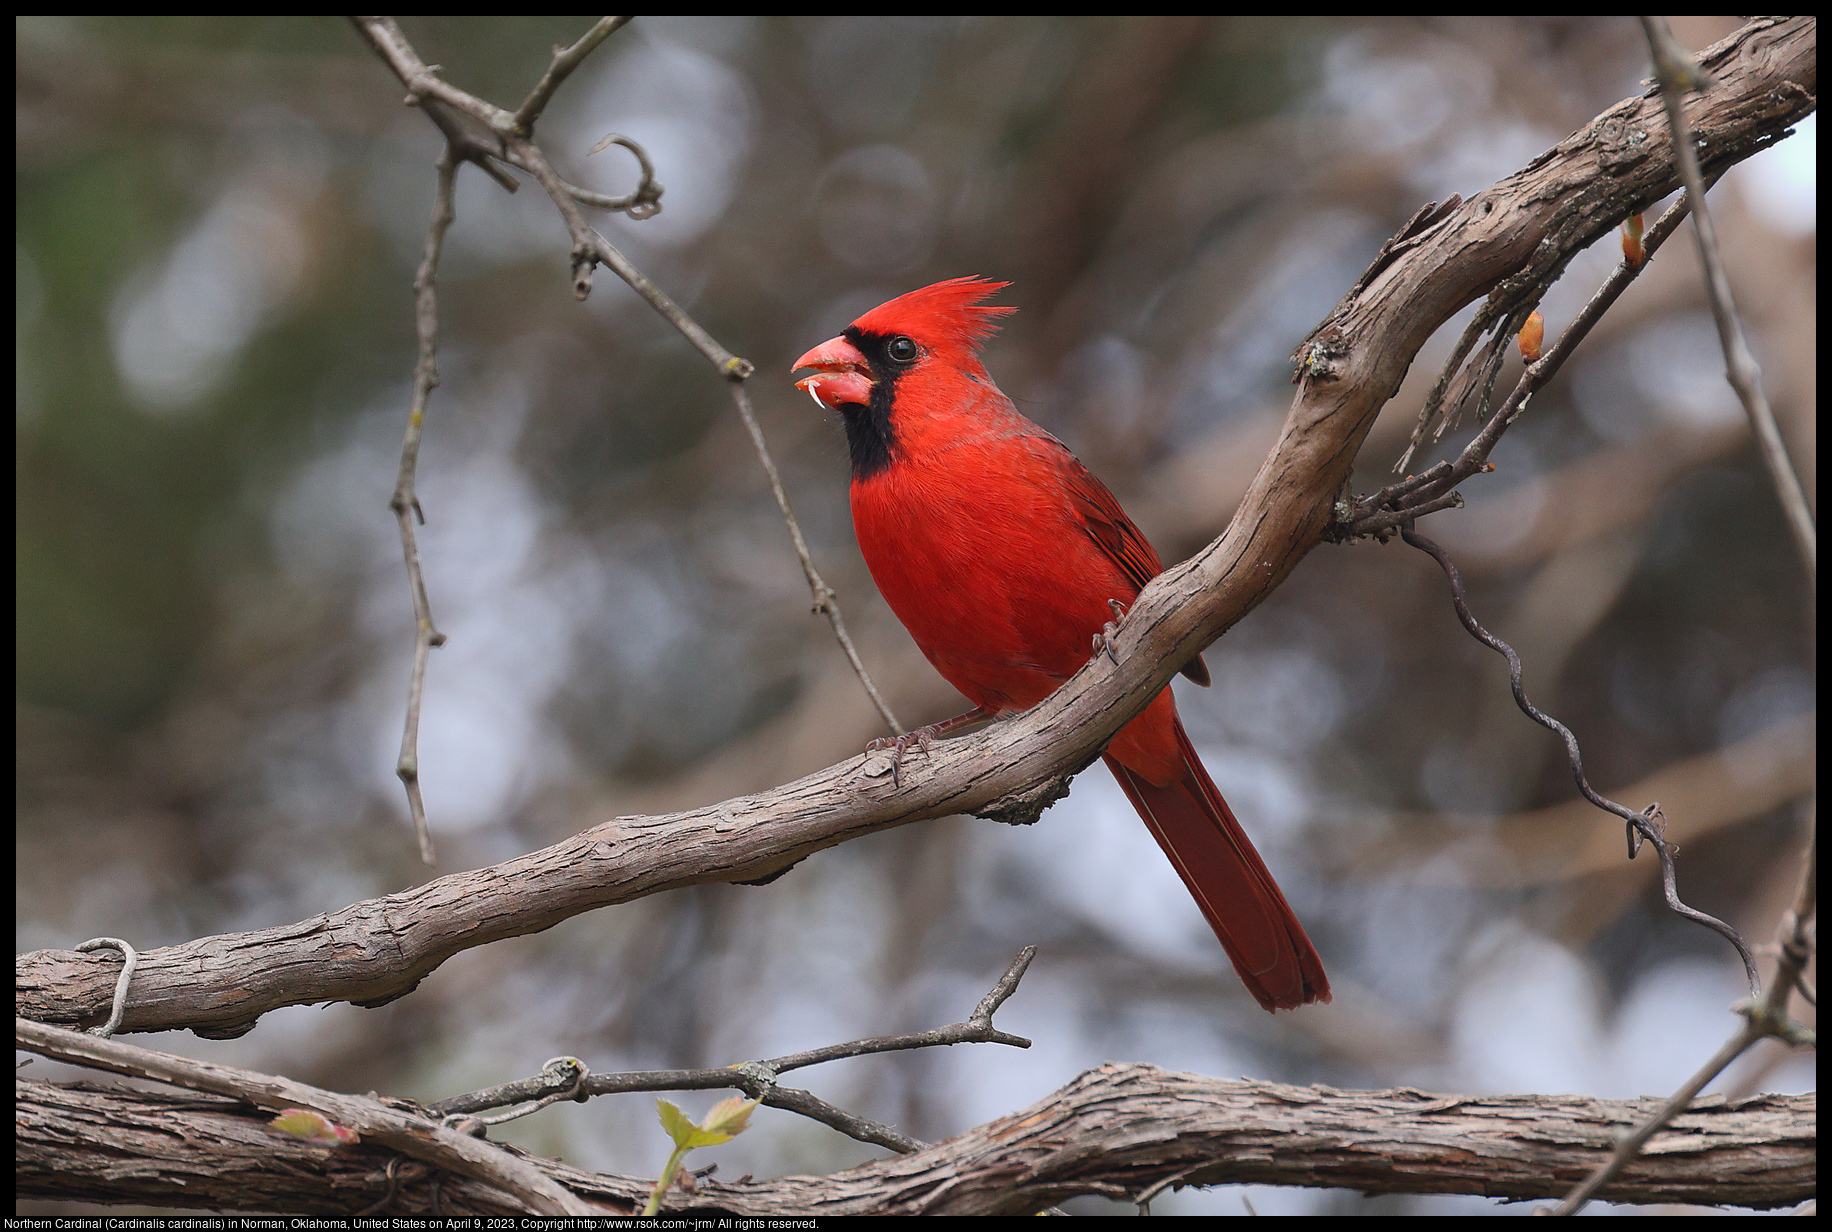 Northern Cardinal (Cardinalis cardinalis) in Norman, Oklahoma, United States on April 9, 2023